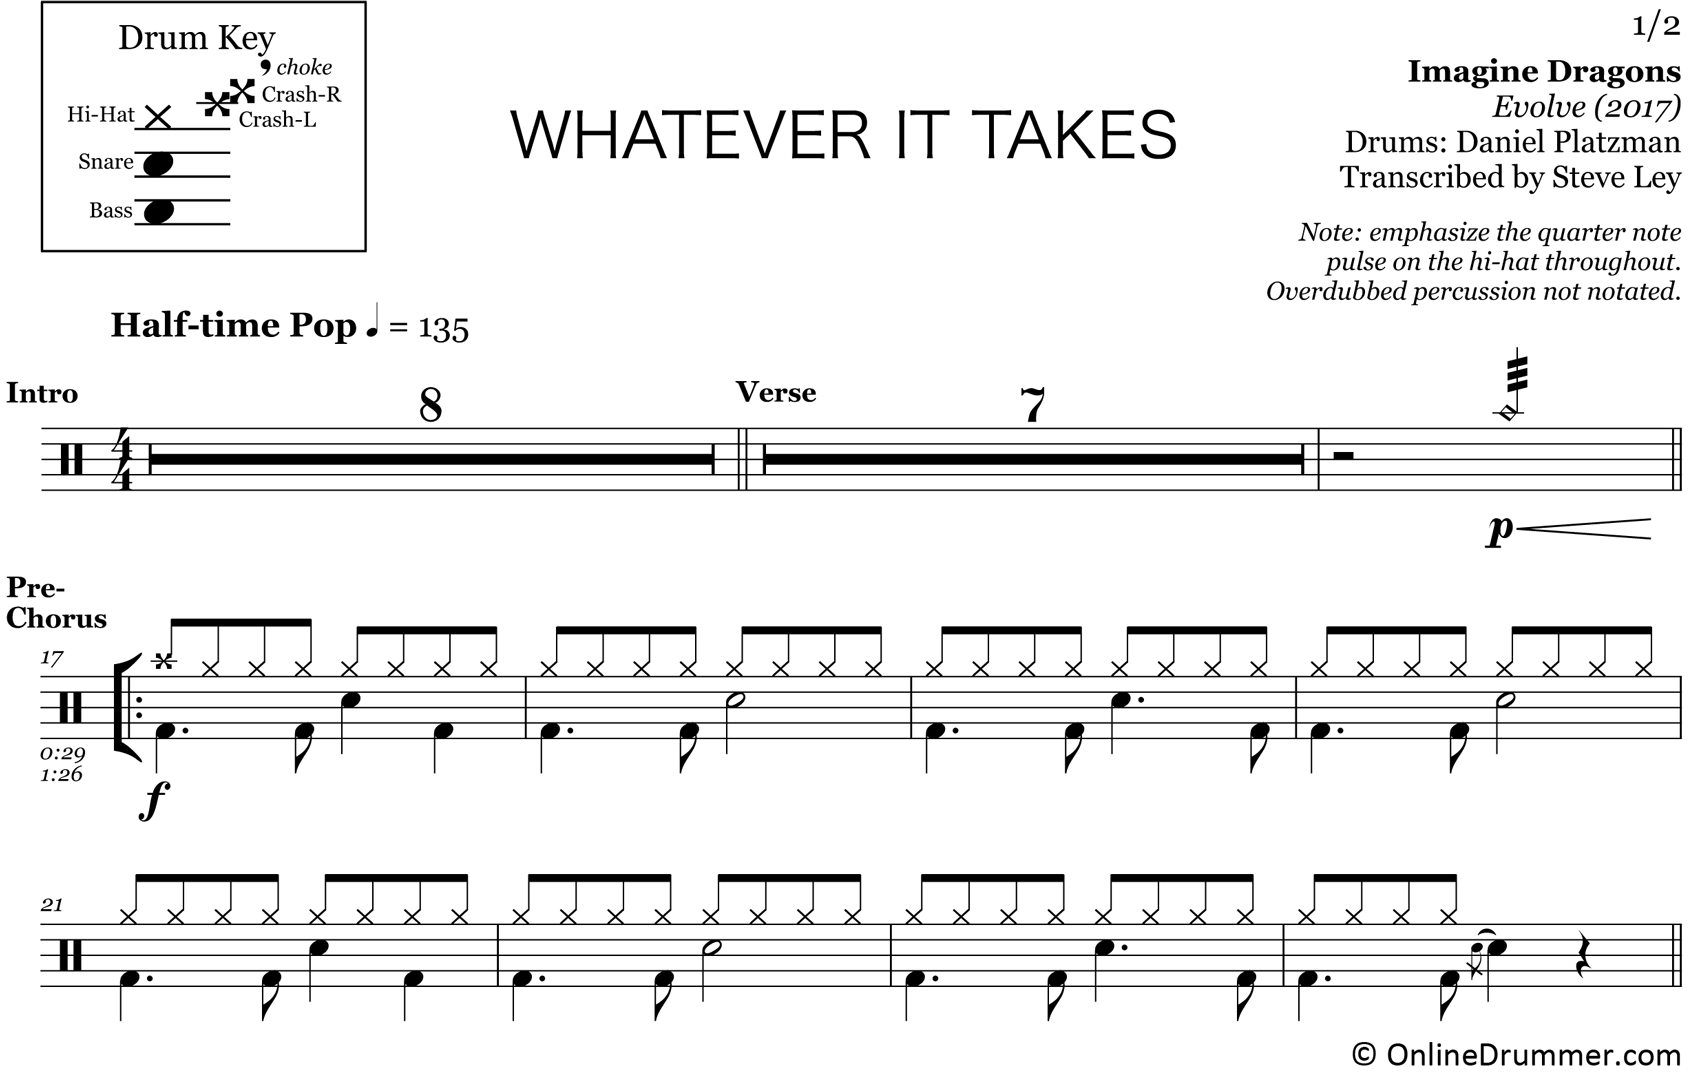 Whatever It Takes - Imagine Dragons - Drum Sheet Music